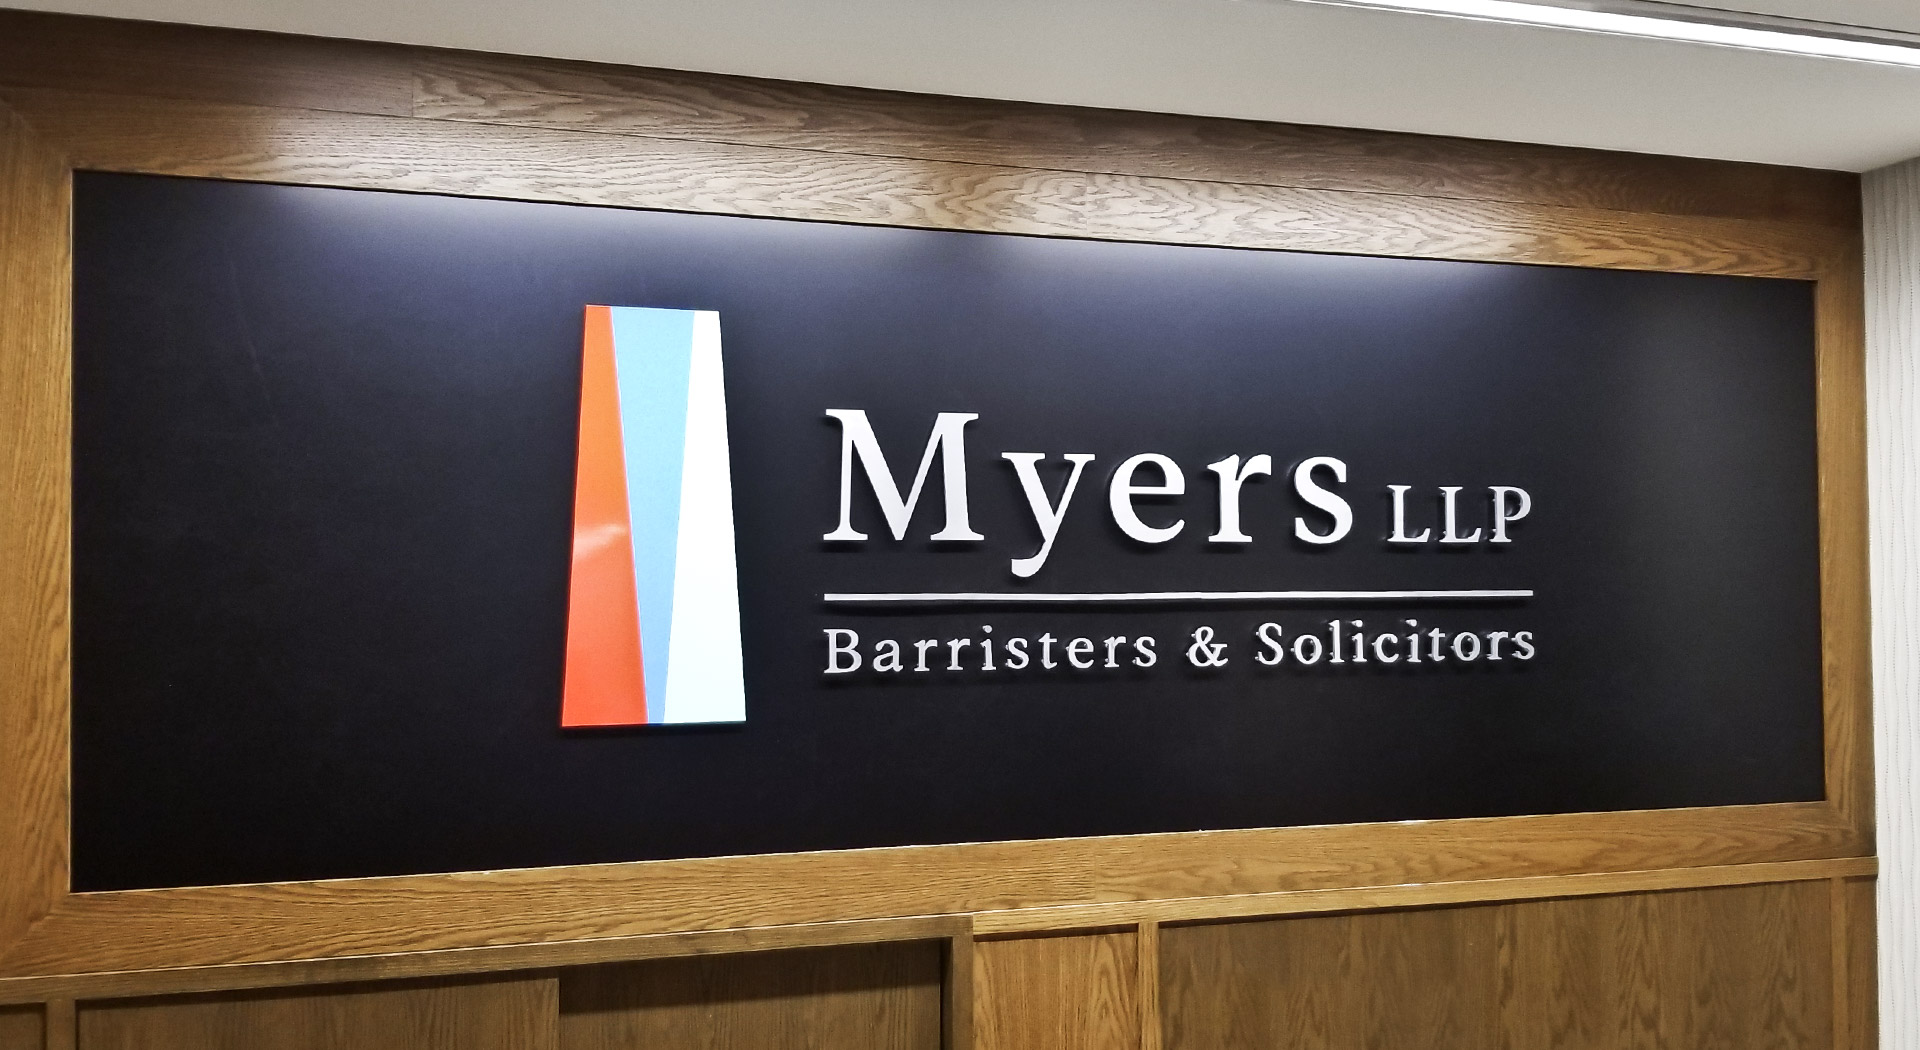 Myers LLP Branding